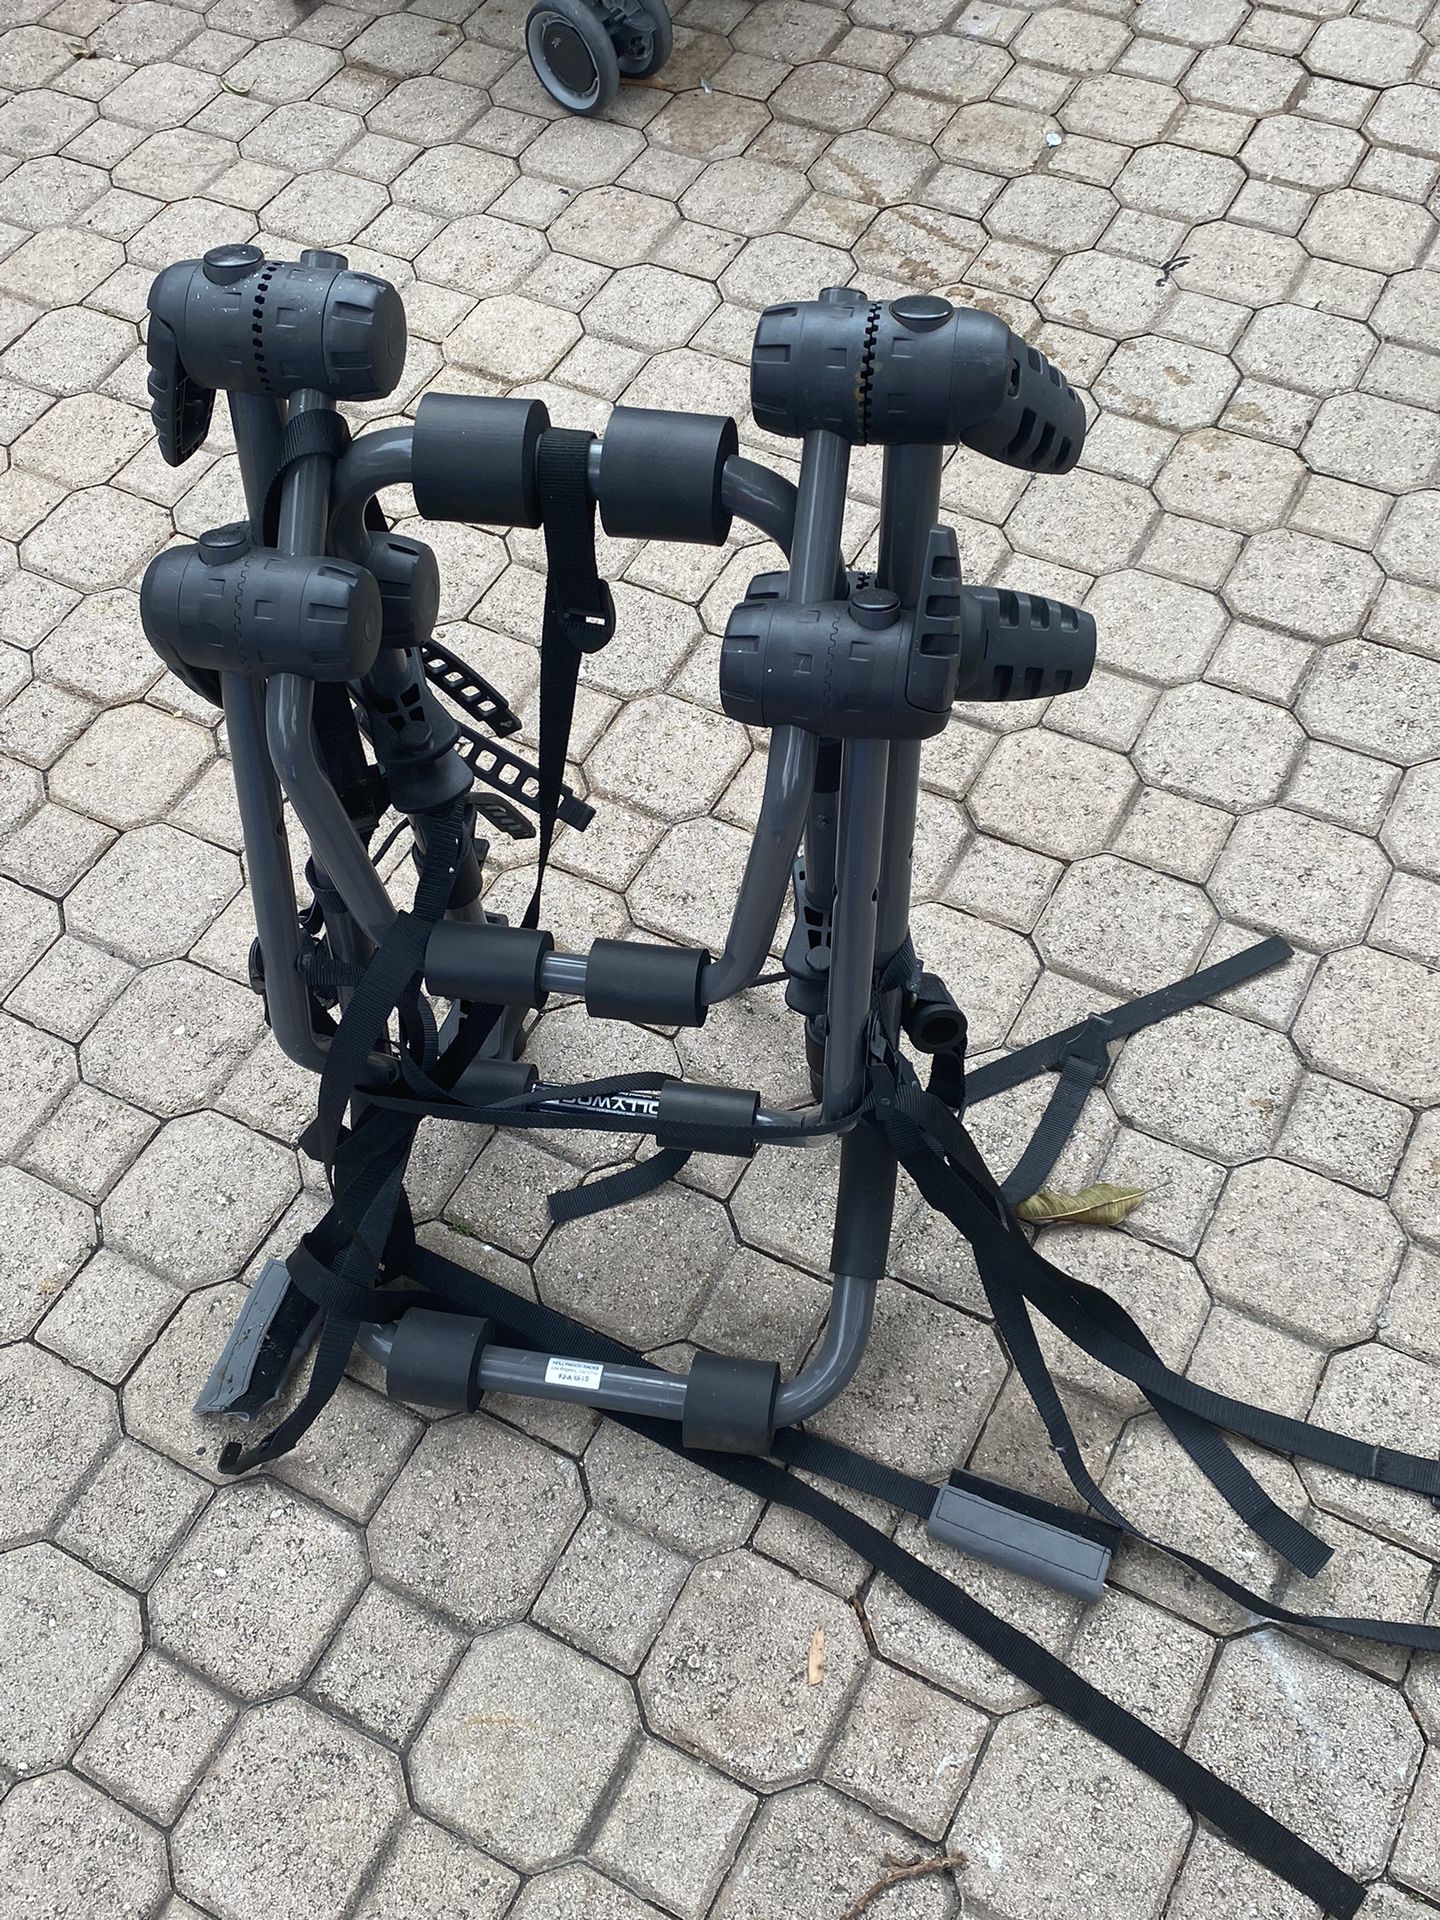 Bike Rack $60 